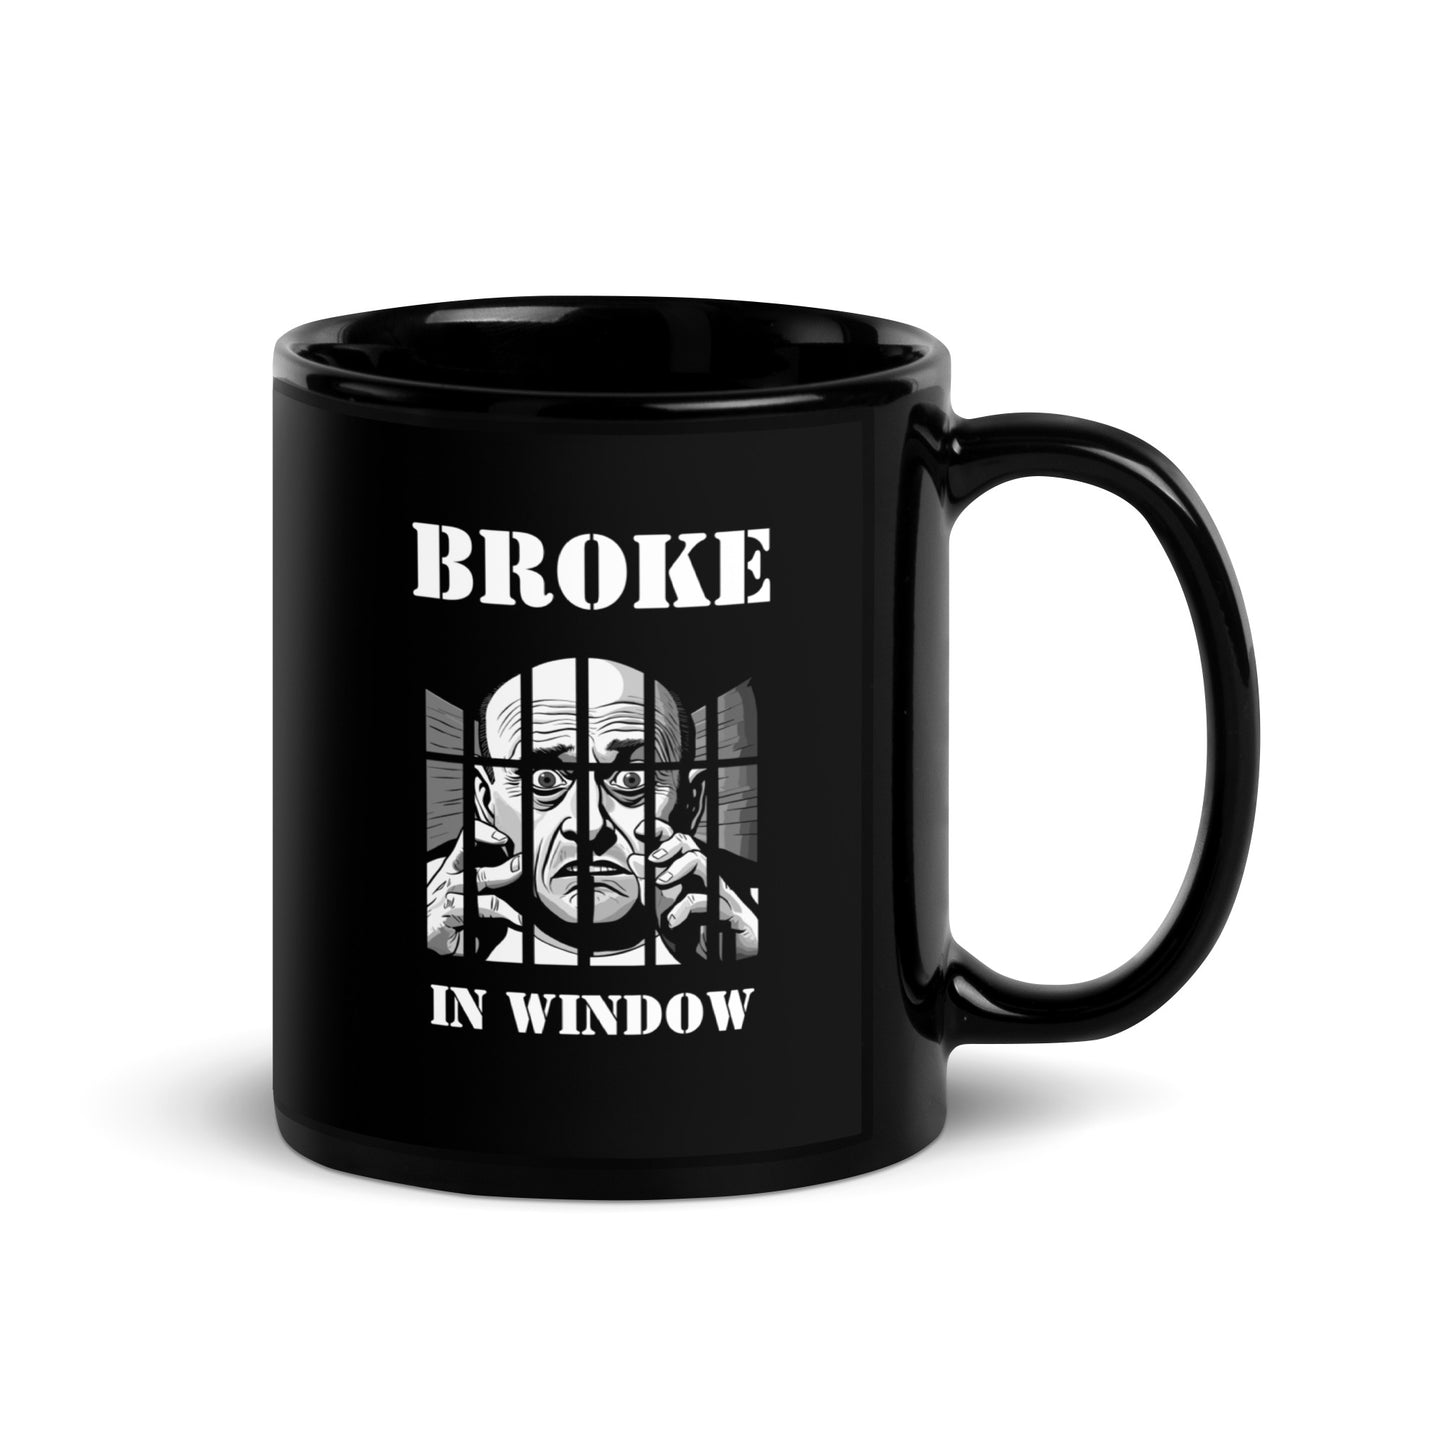 Rudy BROKE IN WINDOW Mug